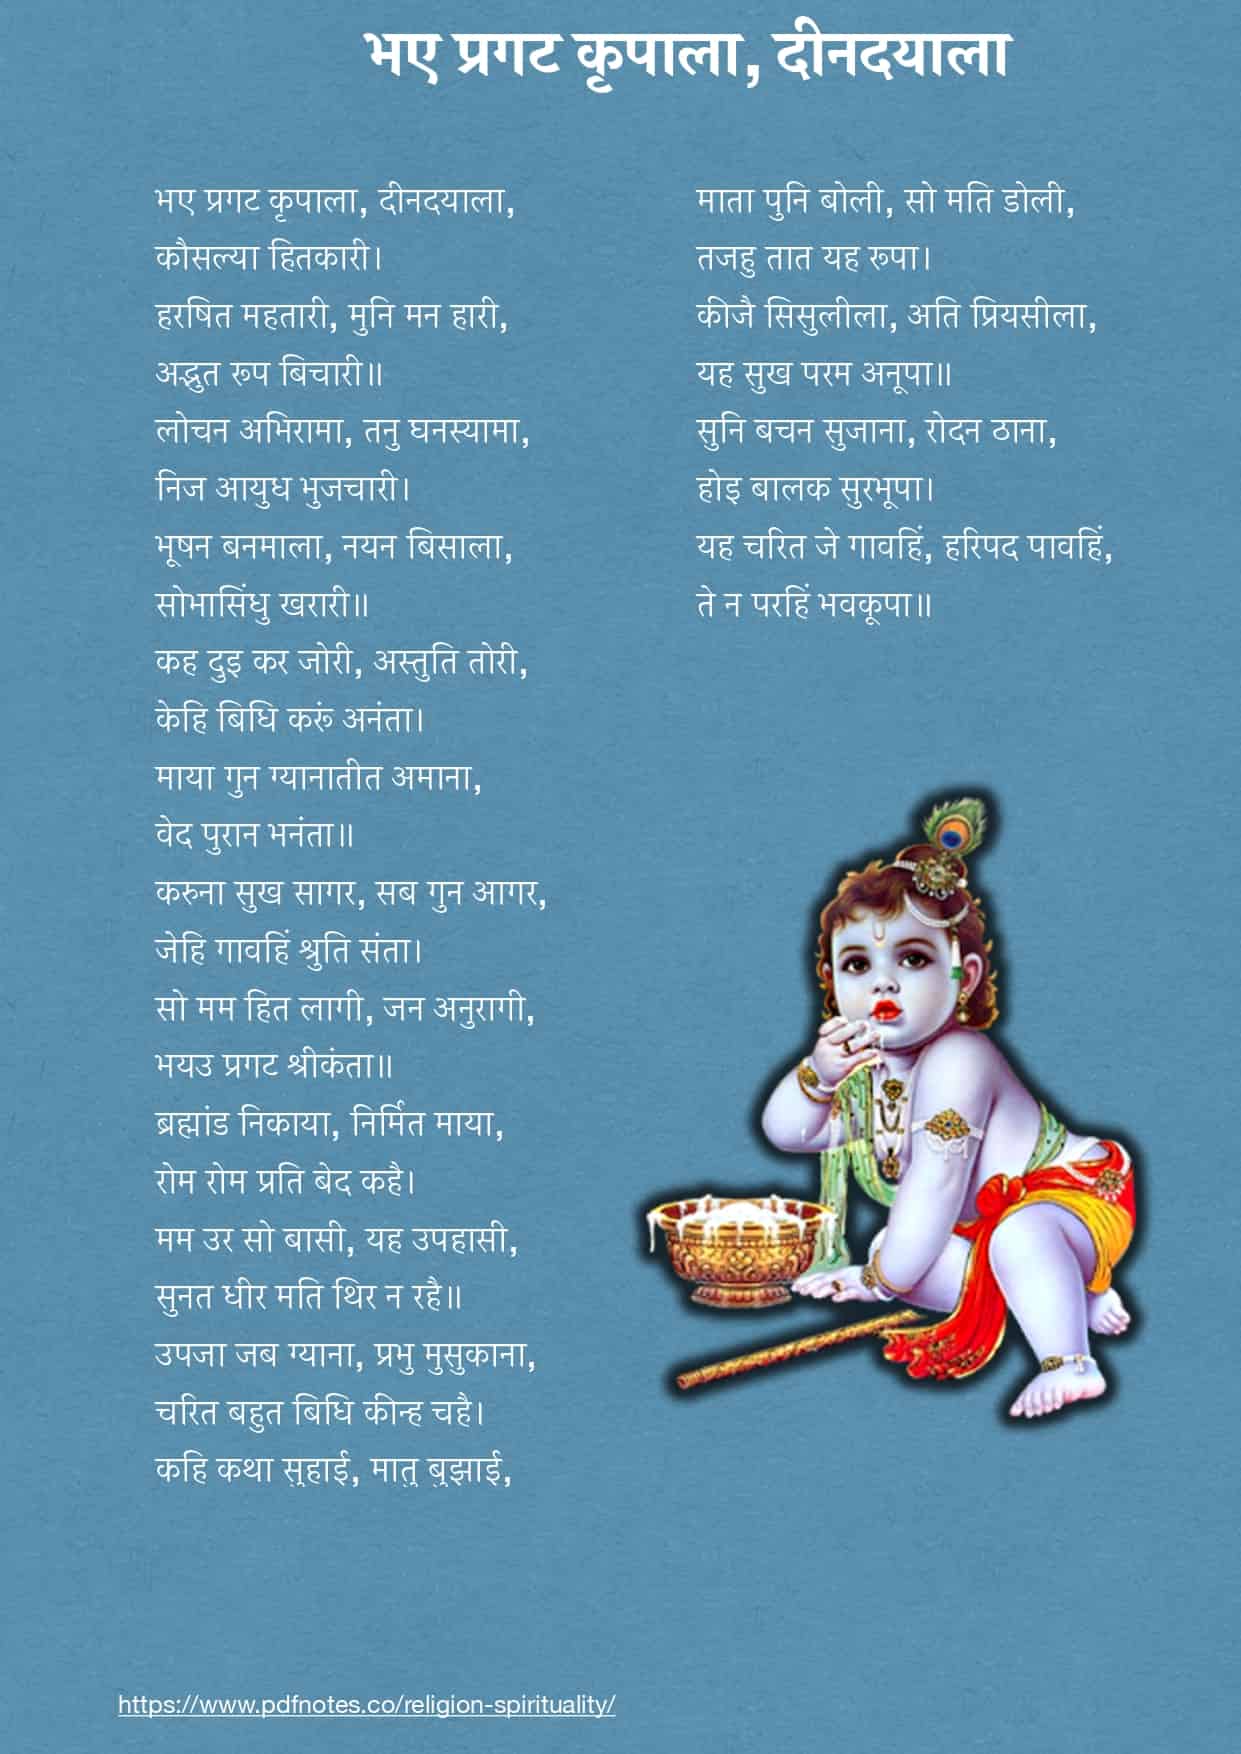 भए प्रगट कृपाला दीनदयाला | Bhaye Pragat Kripala Lyrics In Hindi PDF